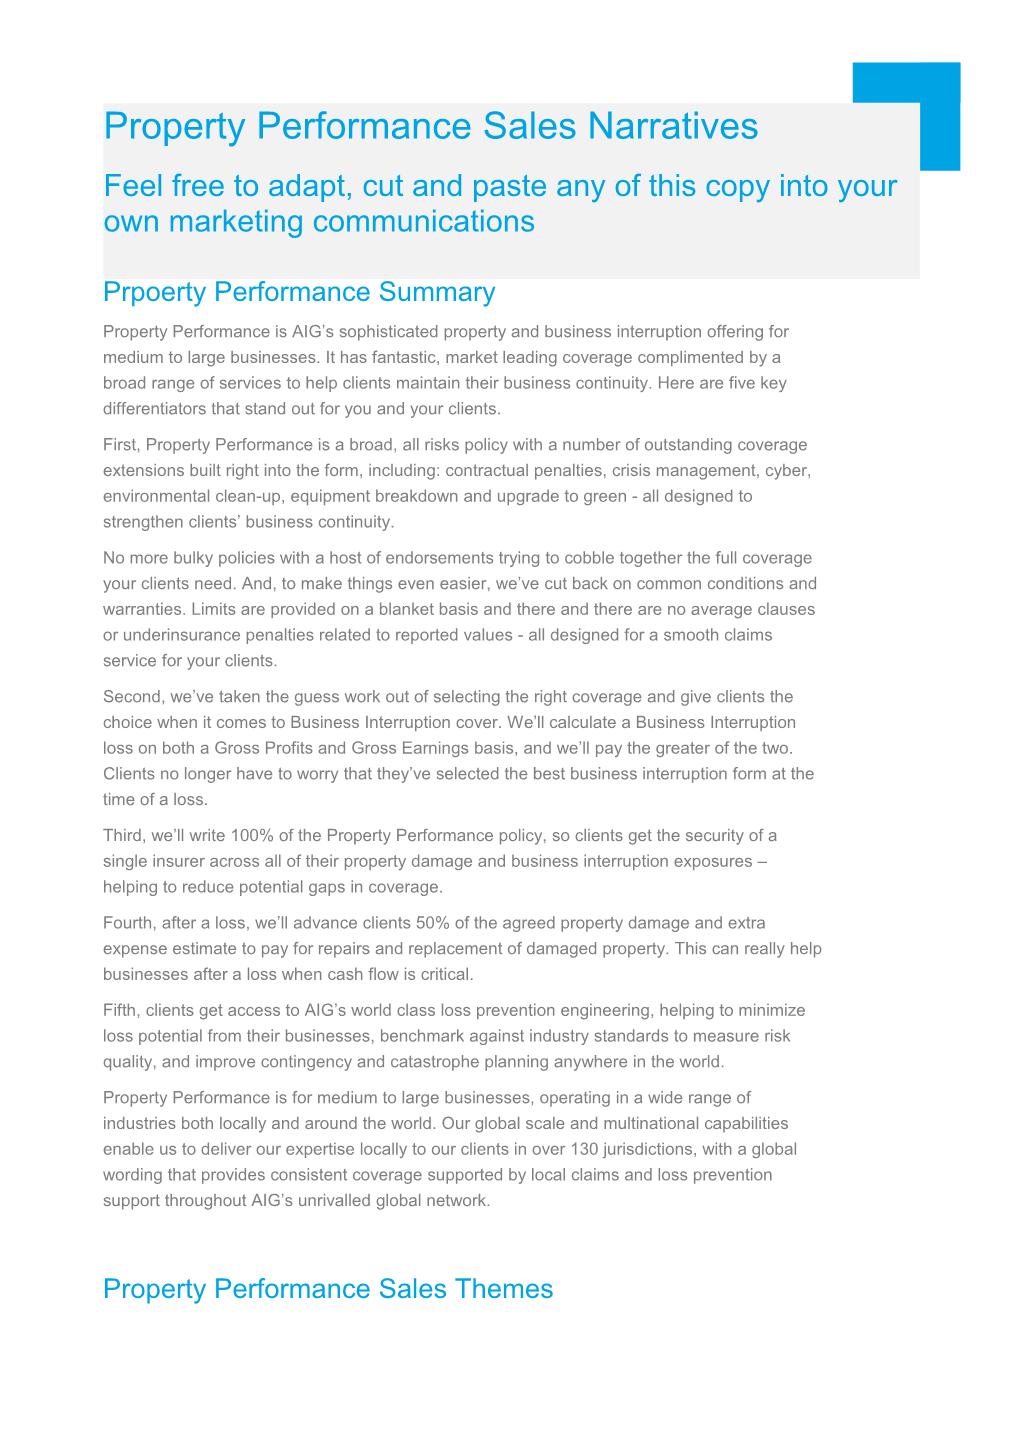 Prpoerty Performance Summary